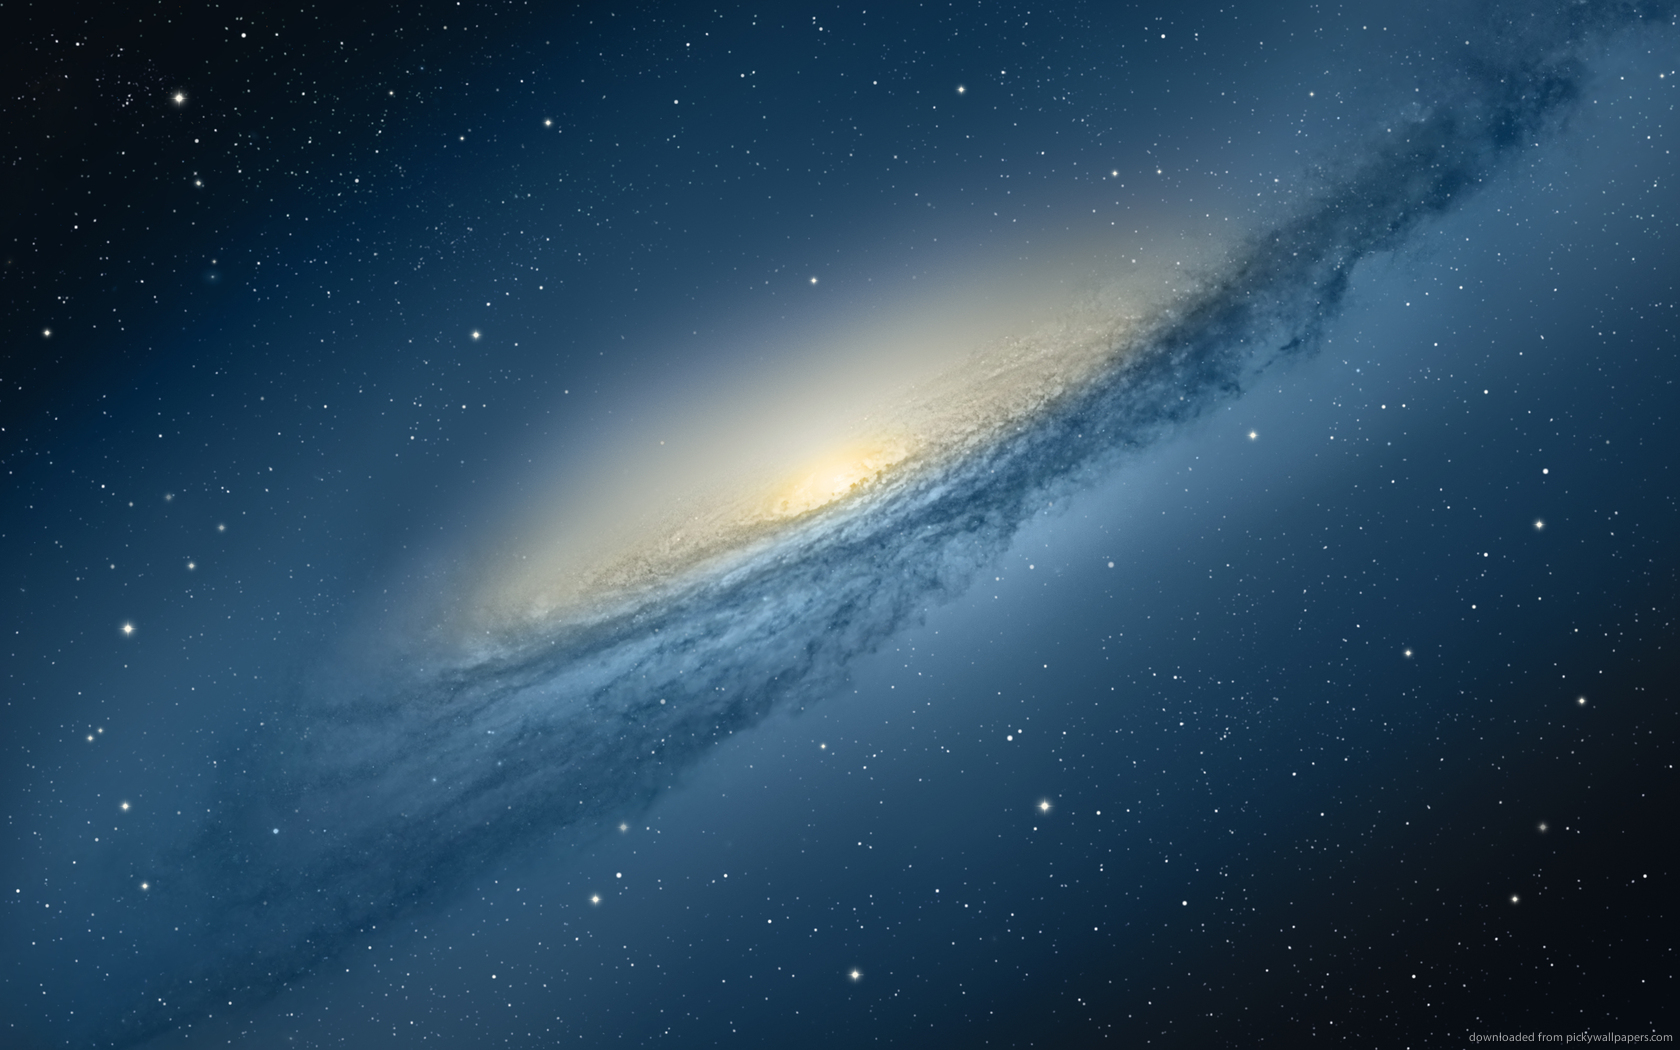 Name Mac Os X Mountain Lion Andromeda Galaxy Jpg Resolution